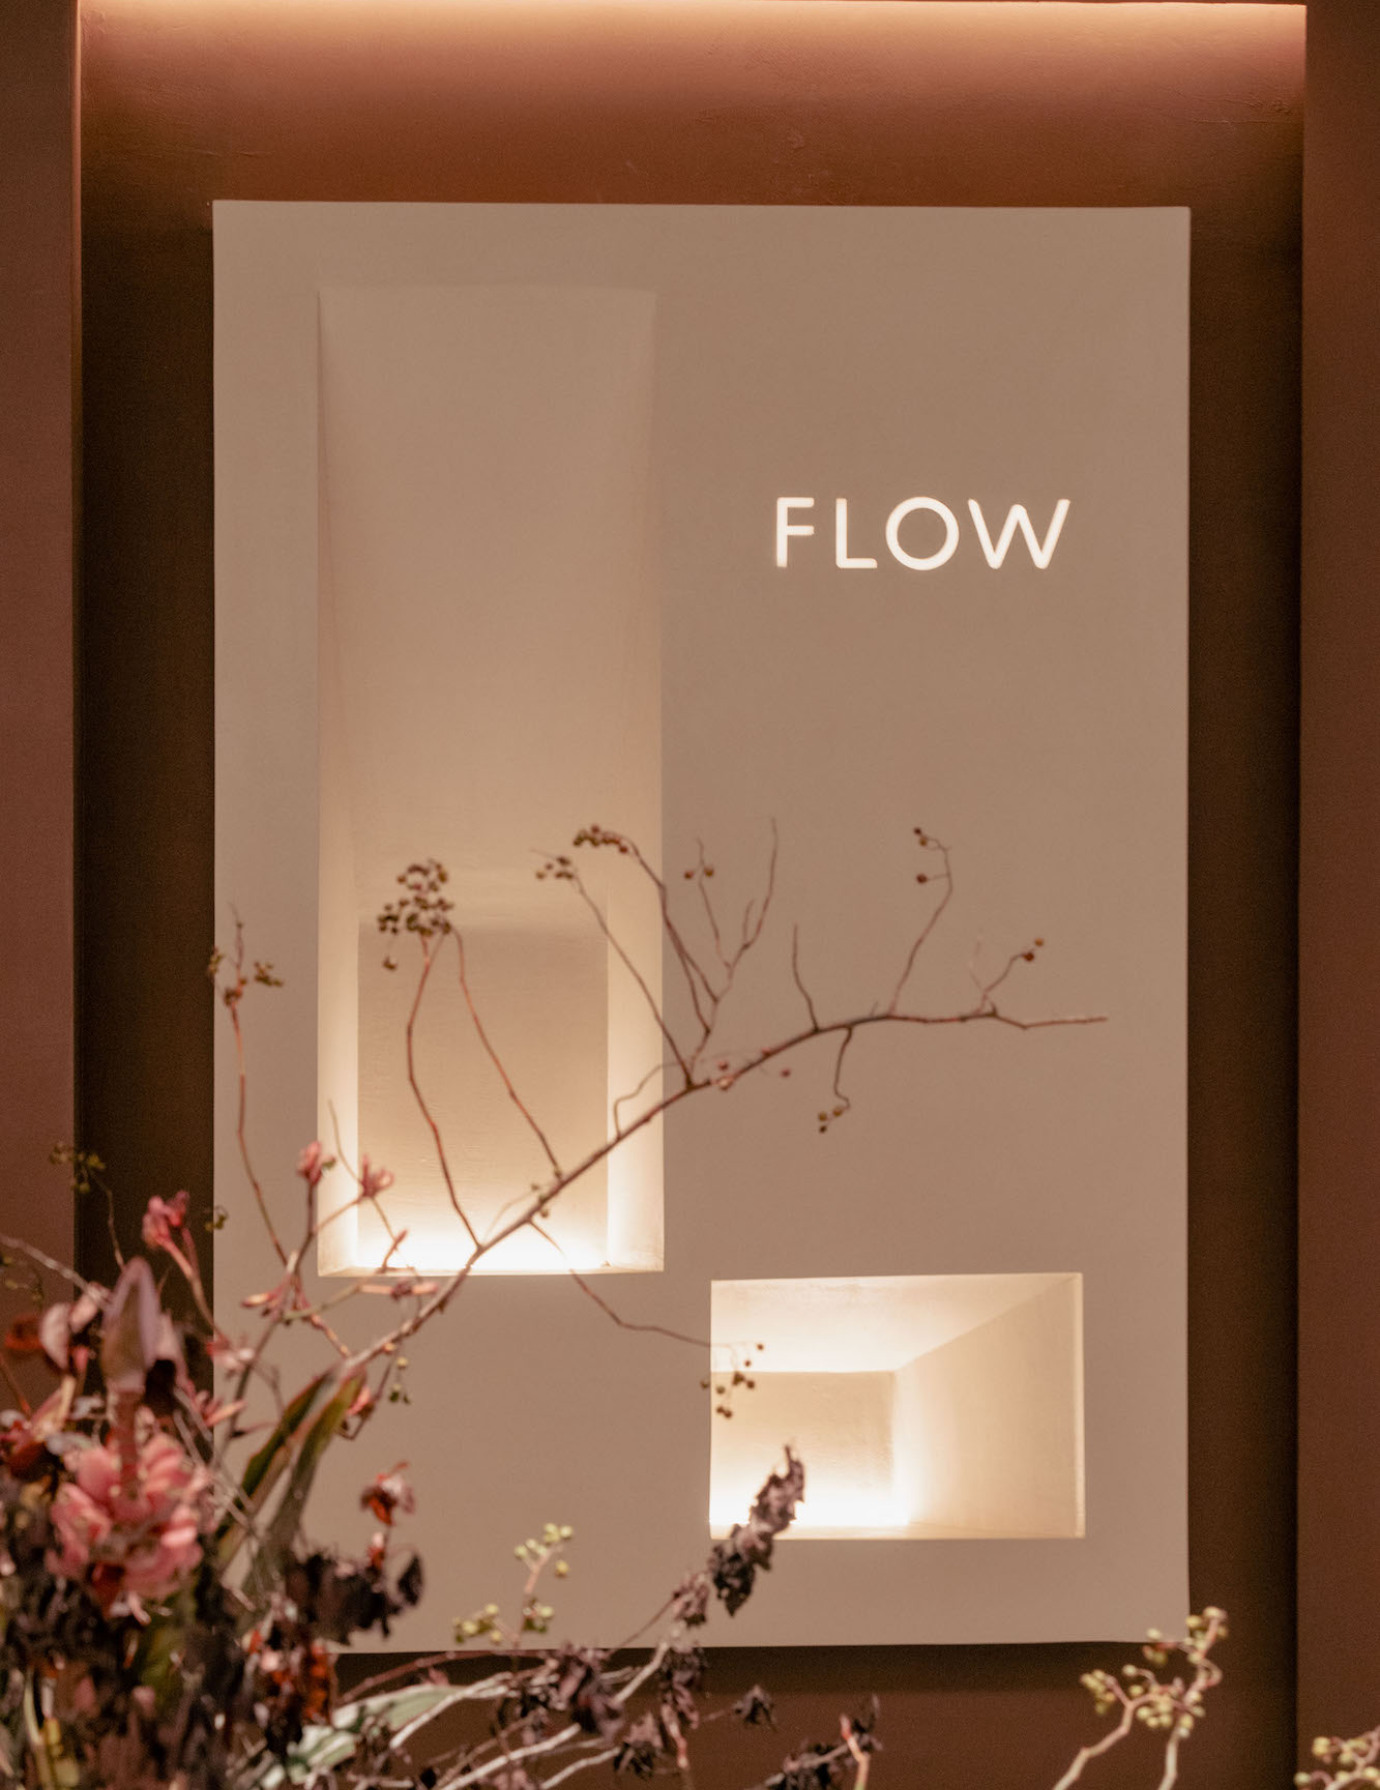 FLOW全新身心疗愈生活方式空间开幕